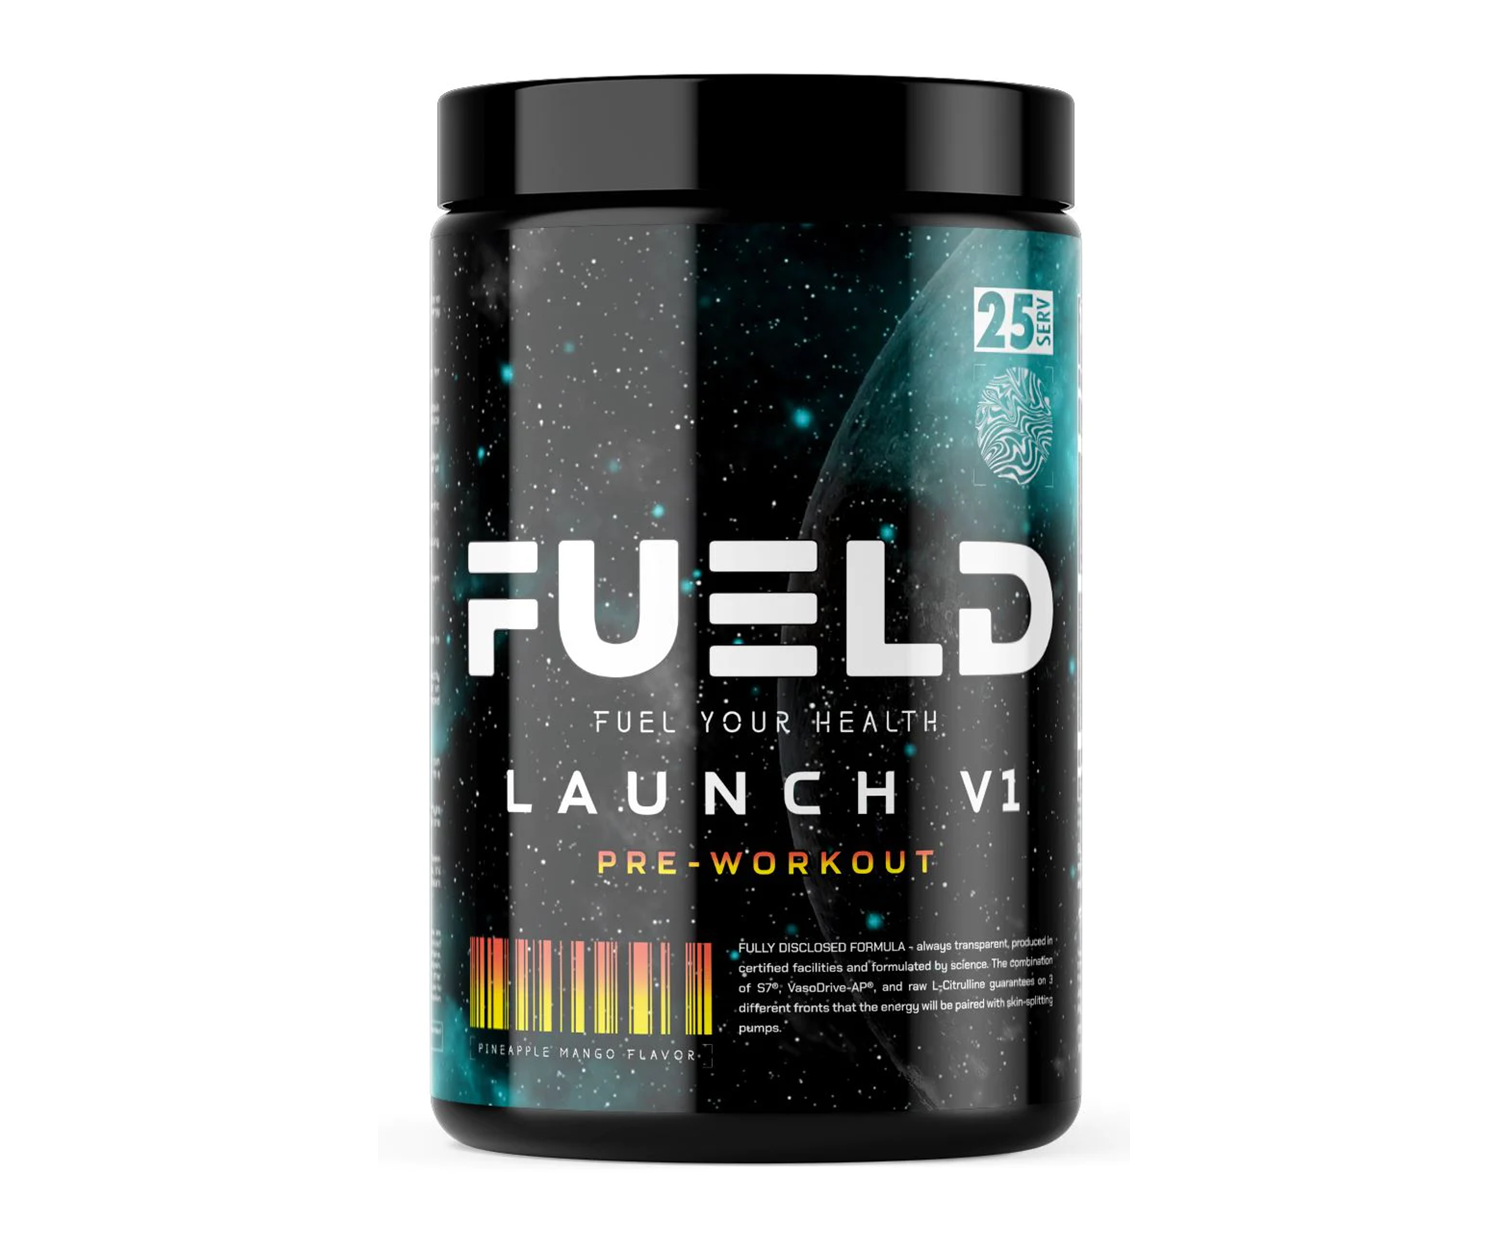 FUELD Launch V1 Pre-Workout, Energy, Pump & Focus Matric 25 servings